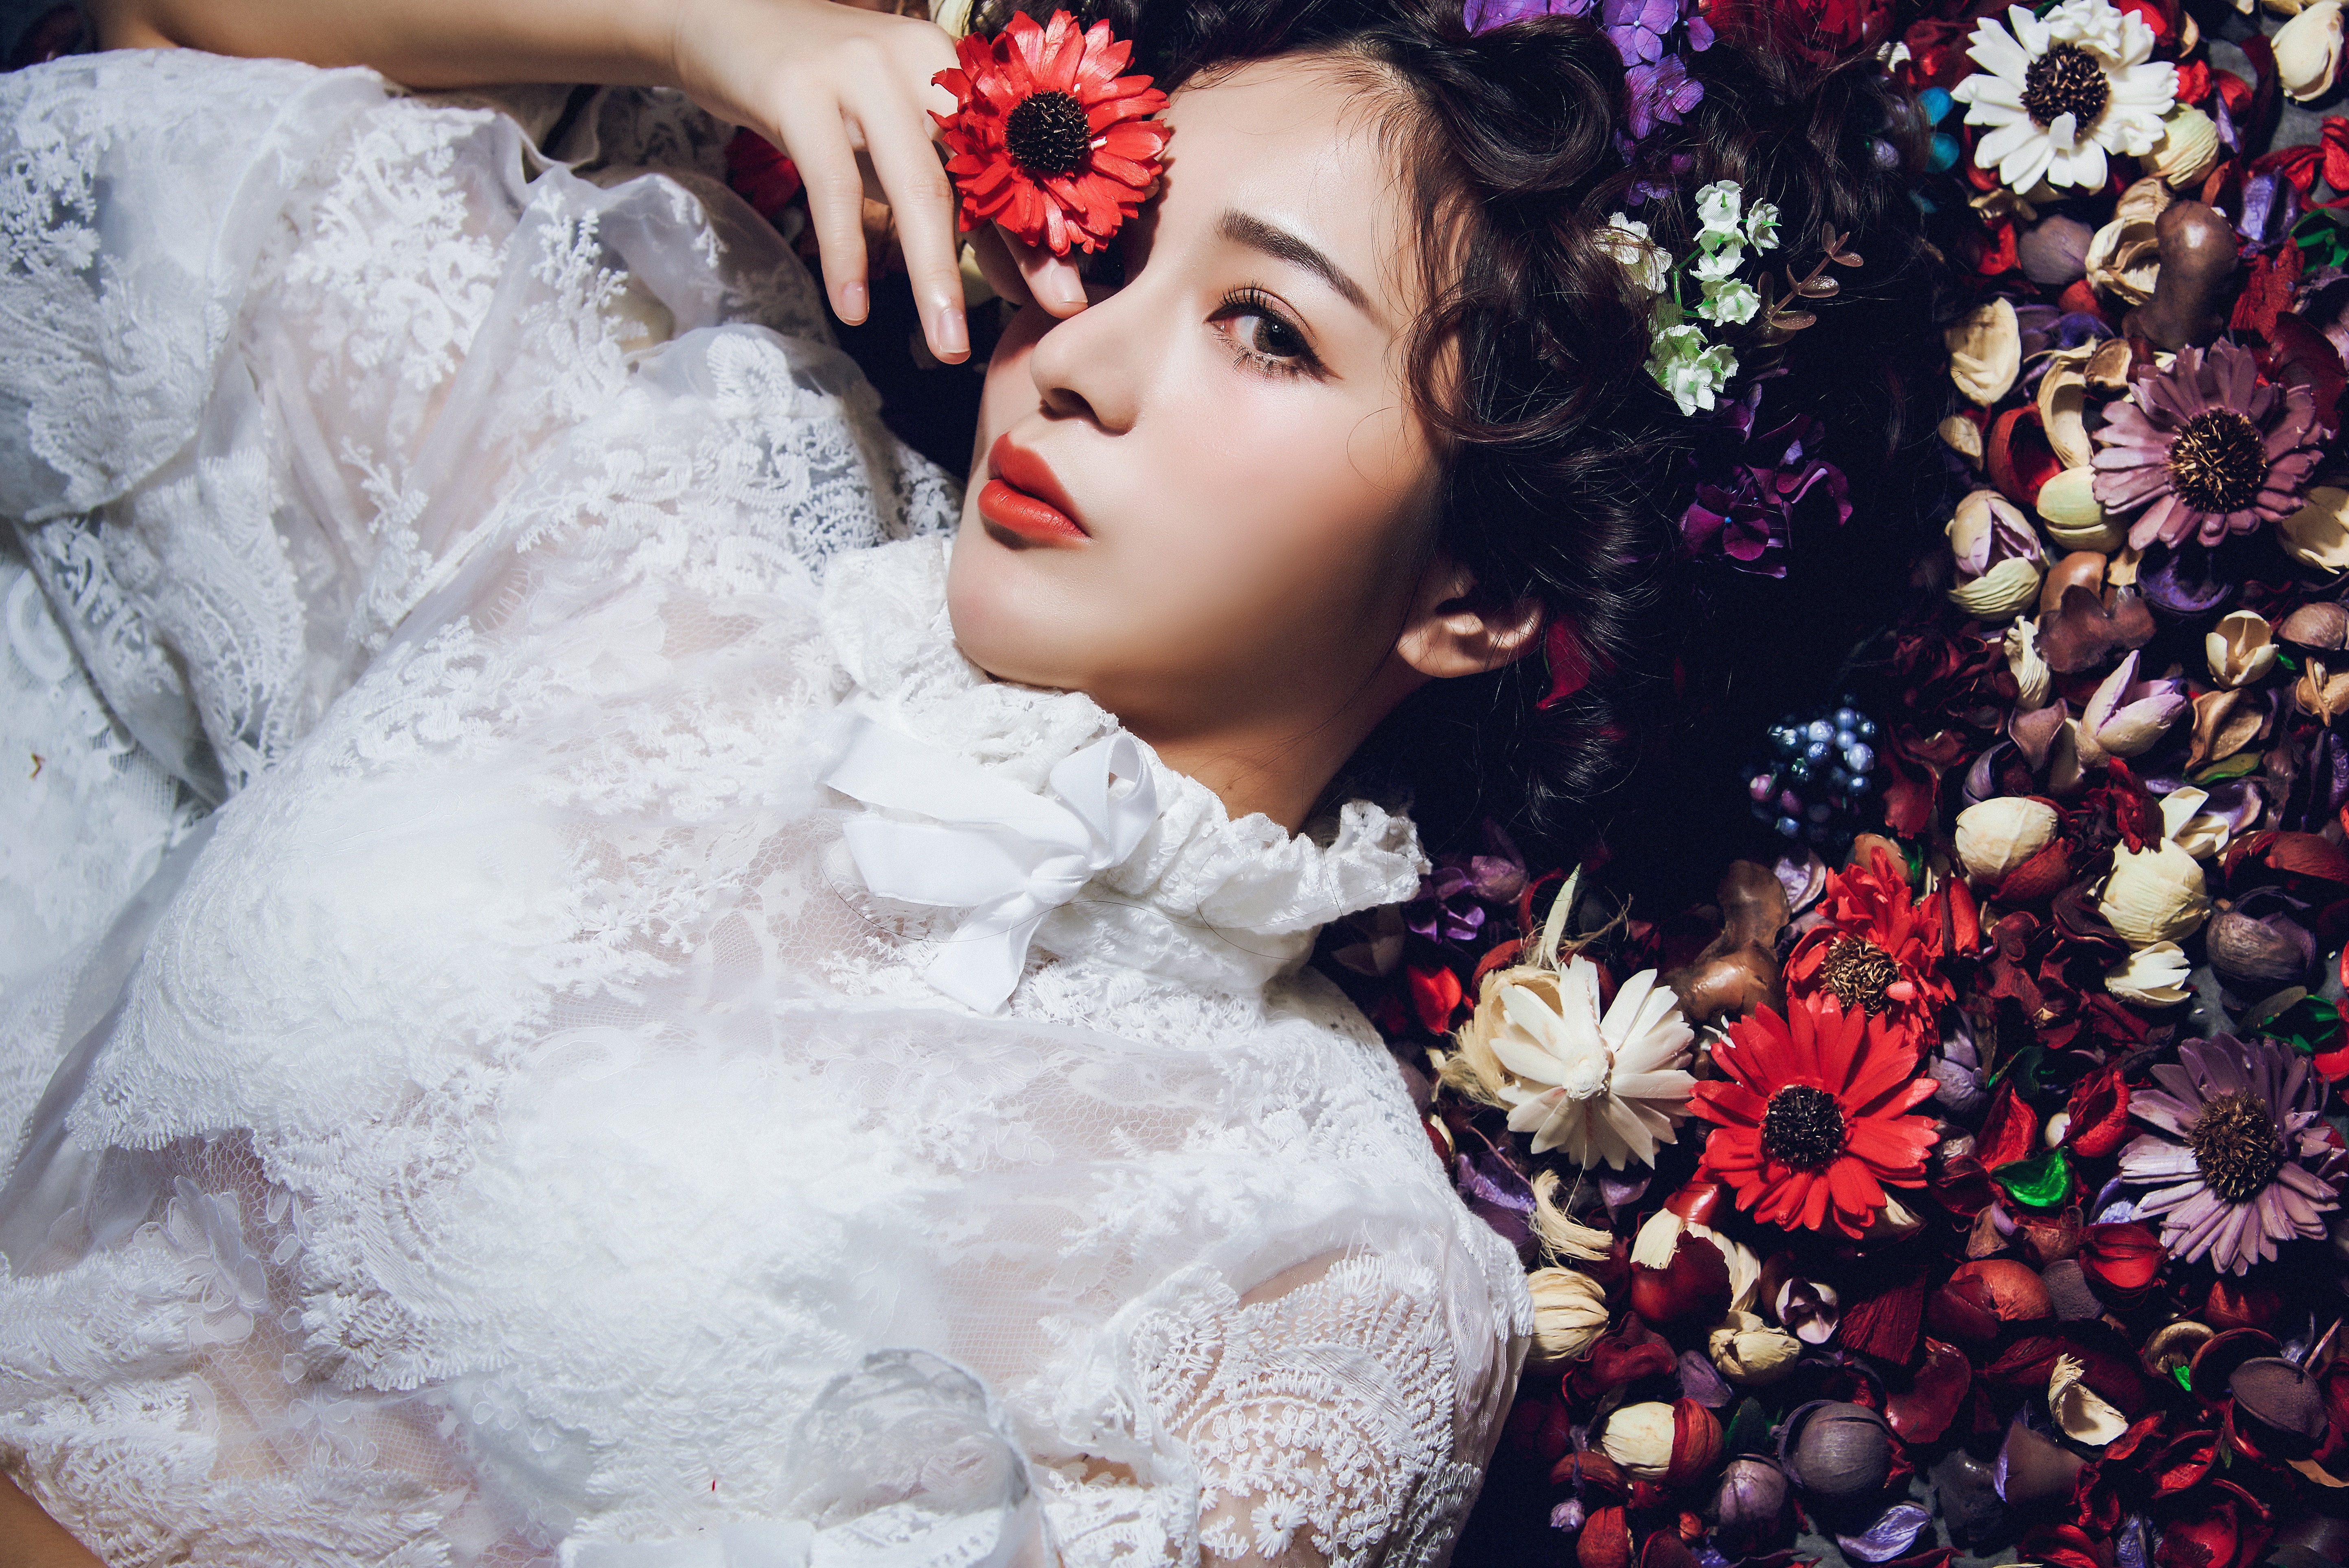 Asian Women Model Flowers Laying On Back White Dress Red Lipstick 5770x3852